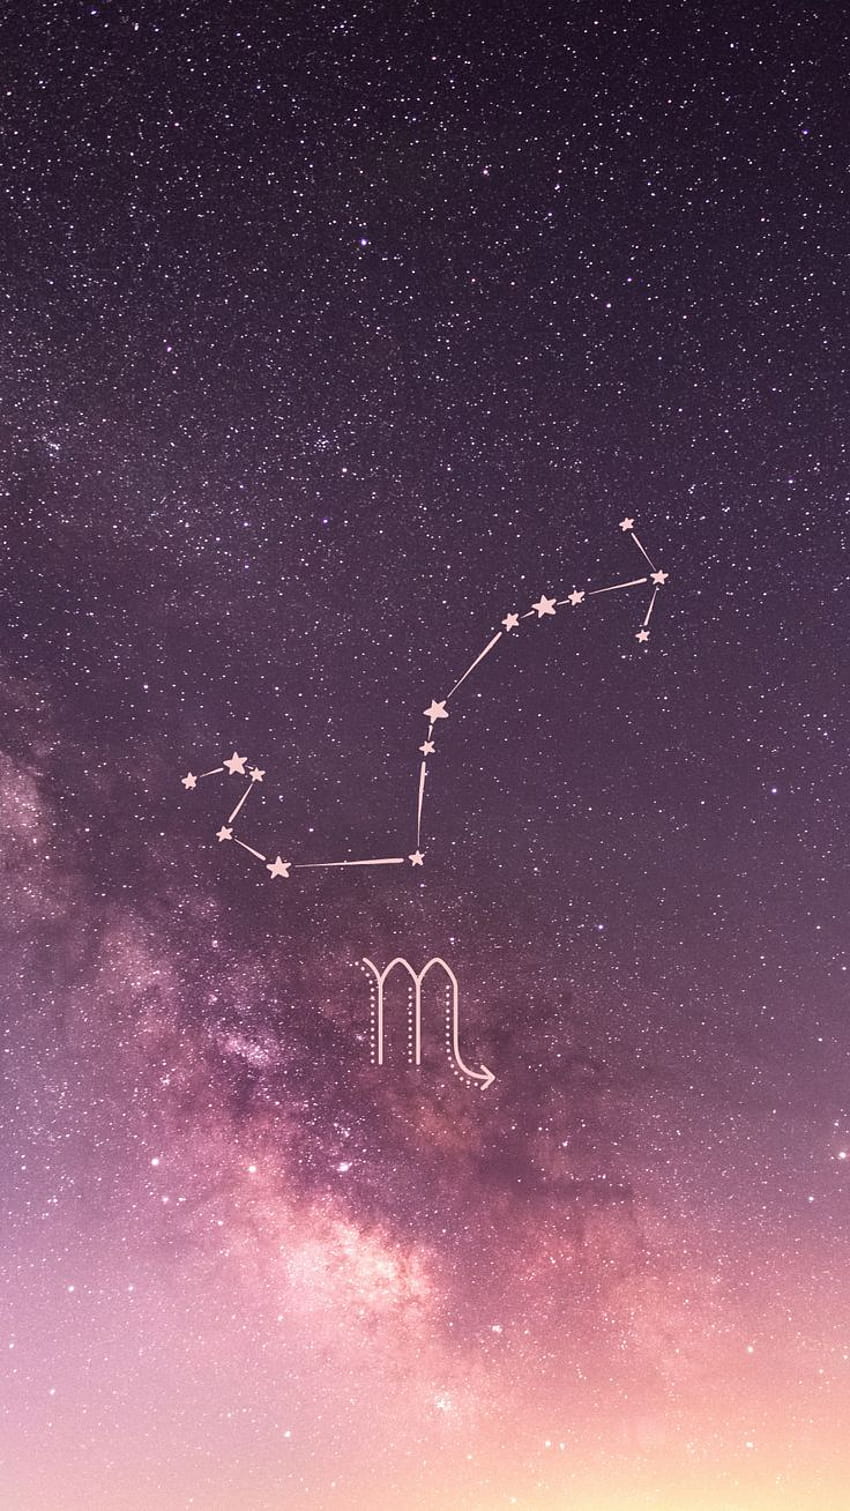 The constellation of Virgo against a starry sky - Scorpio